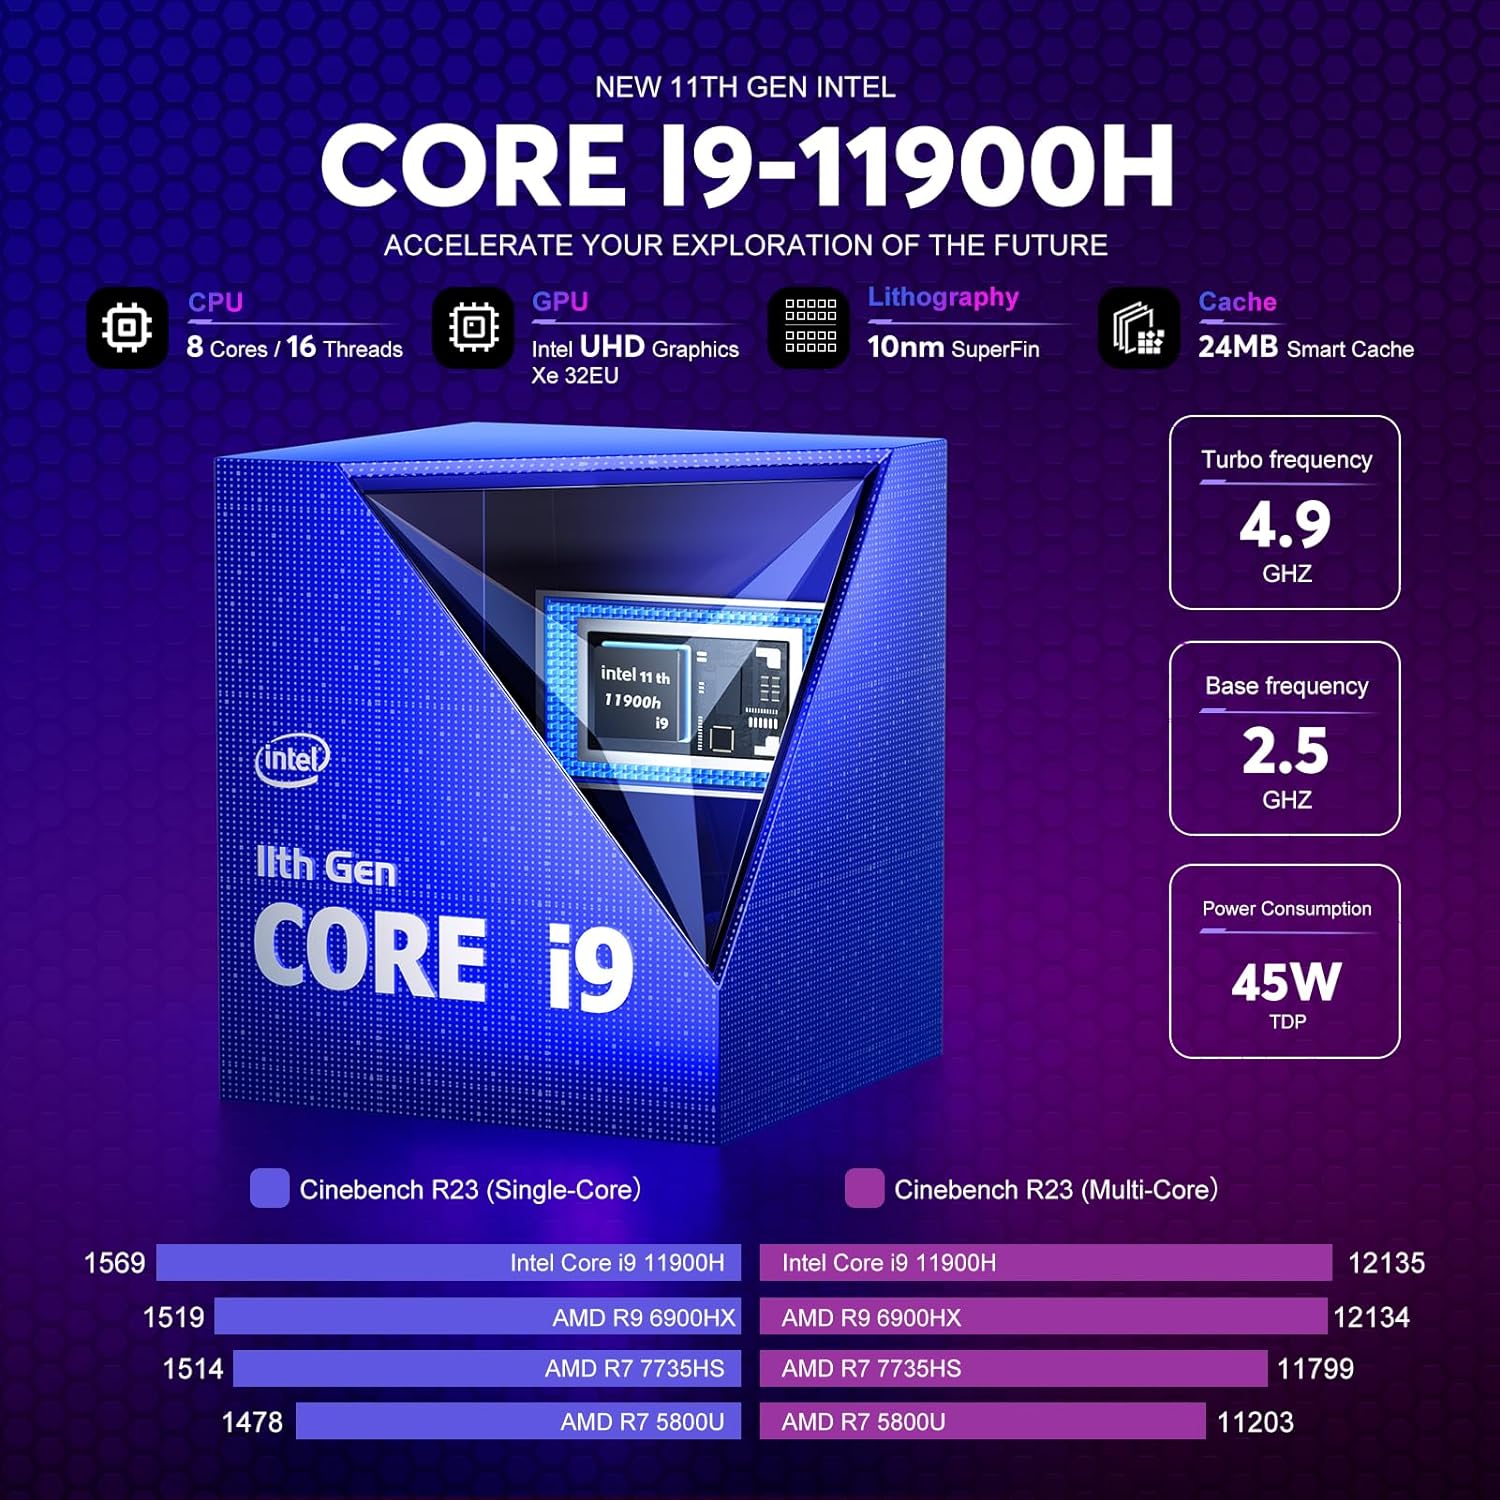 [Mini Gaming PC] Intel Core i9-11900H, up to 4.9GHz, 16GB DDR4 Dual Channel 512GB M.2 NVMe SSD, Mini PC [3 Adjustable Mode/RGB Lights] Mini Computers 4K Triple Display, Desktop Computer WiFi6, BT5.2